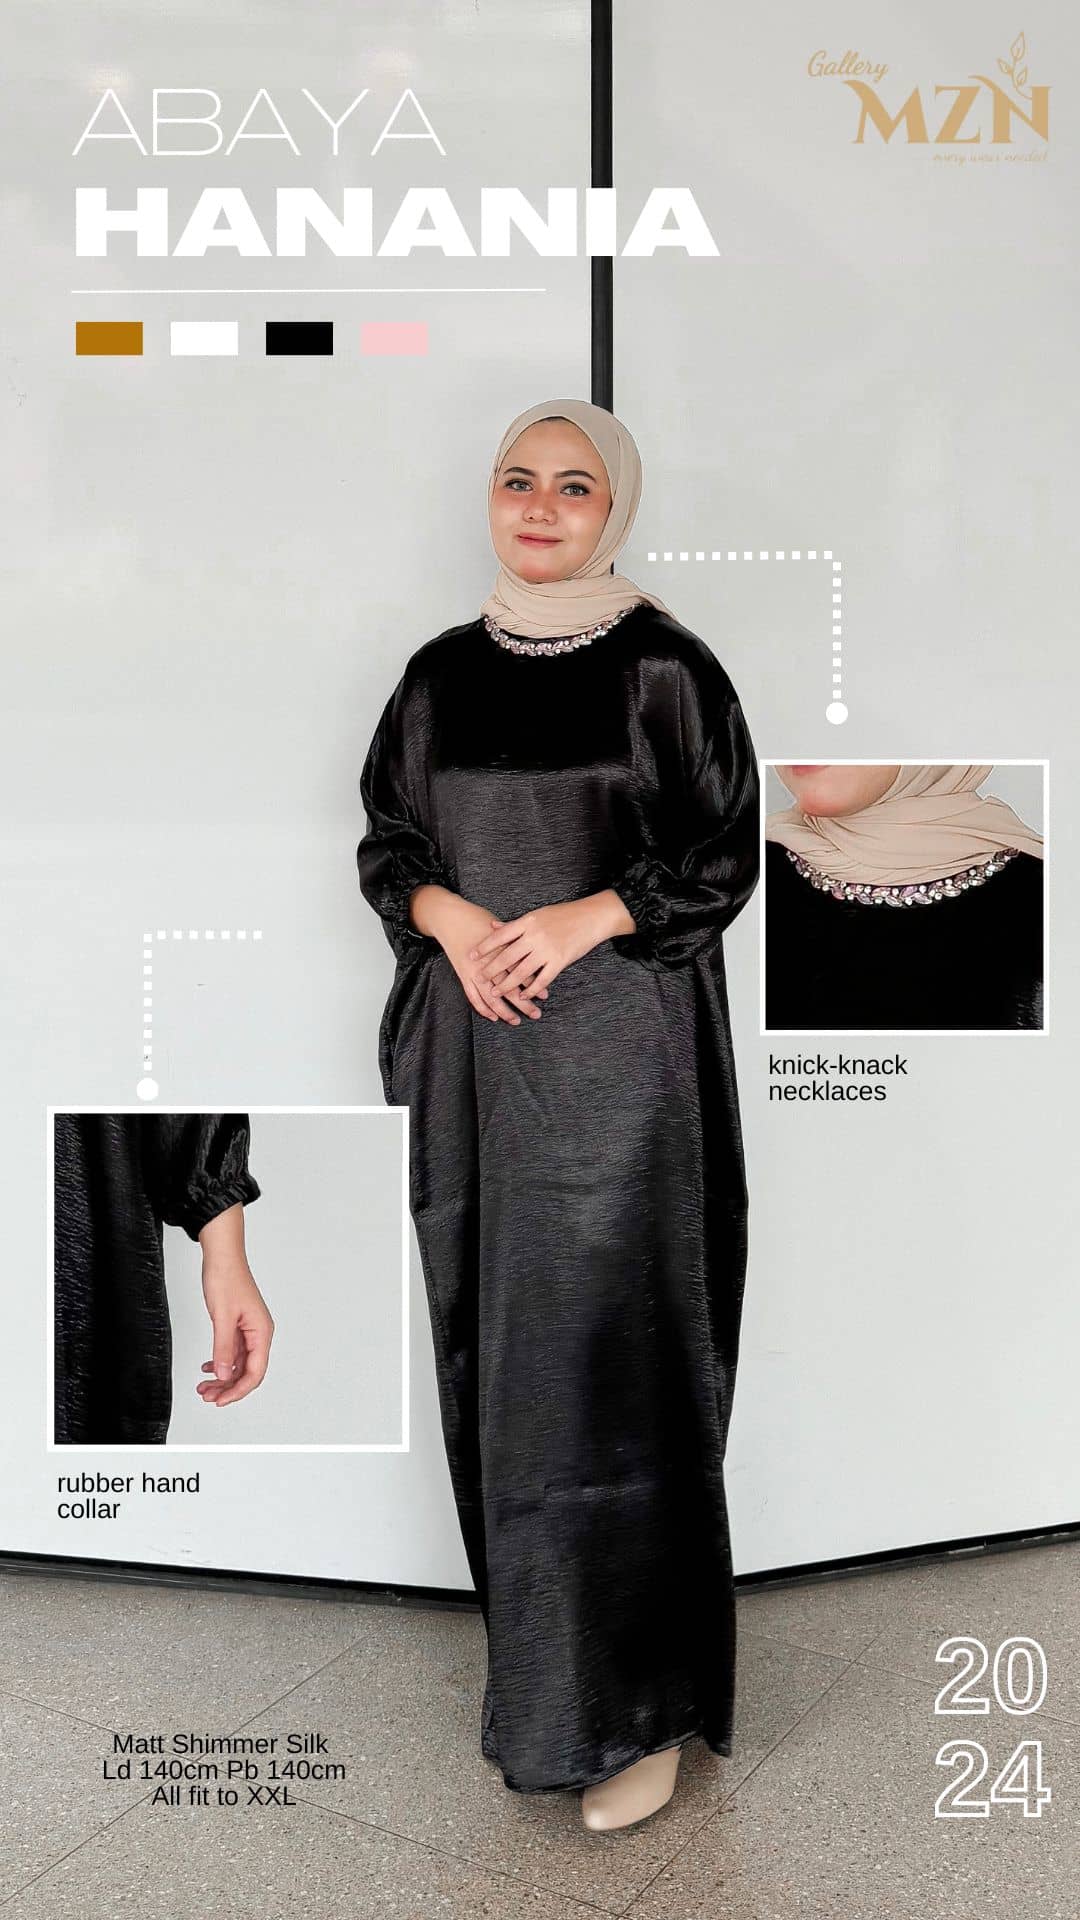 Abaya Hanania Shimmer Silk, Glossy, Metalic Shining Foto Model #4